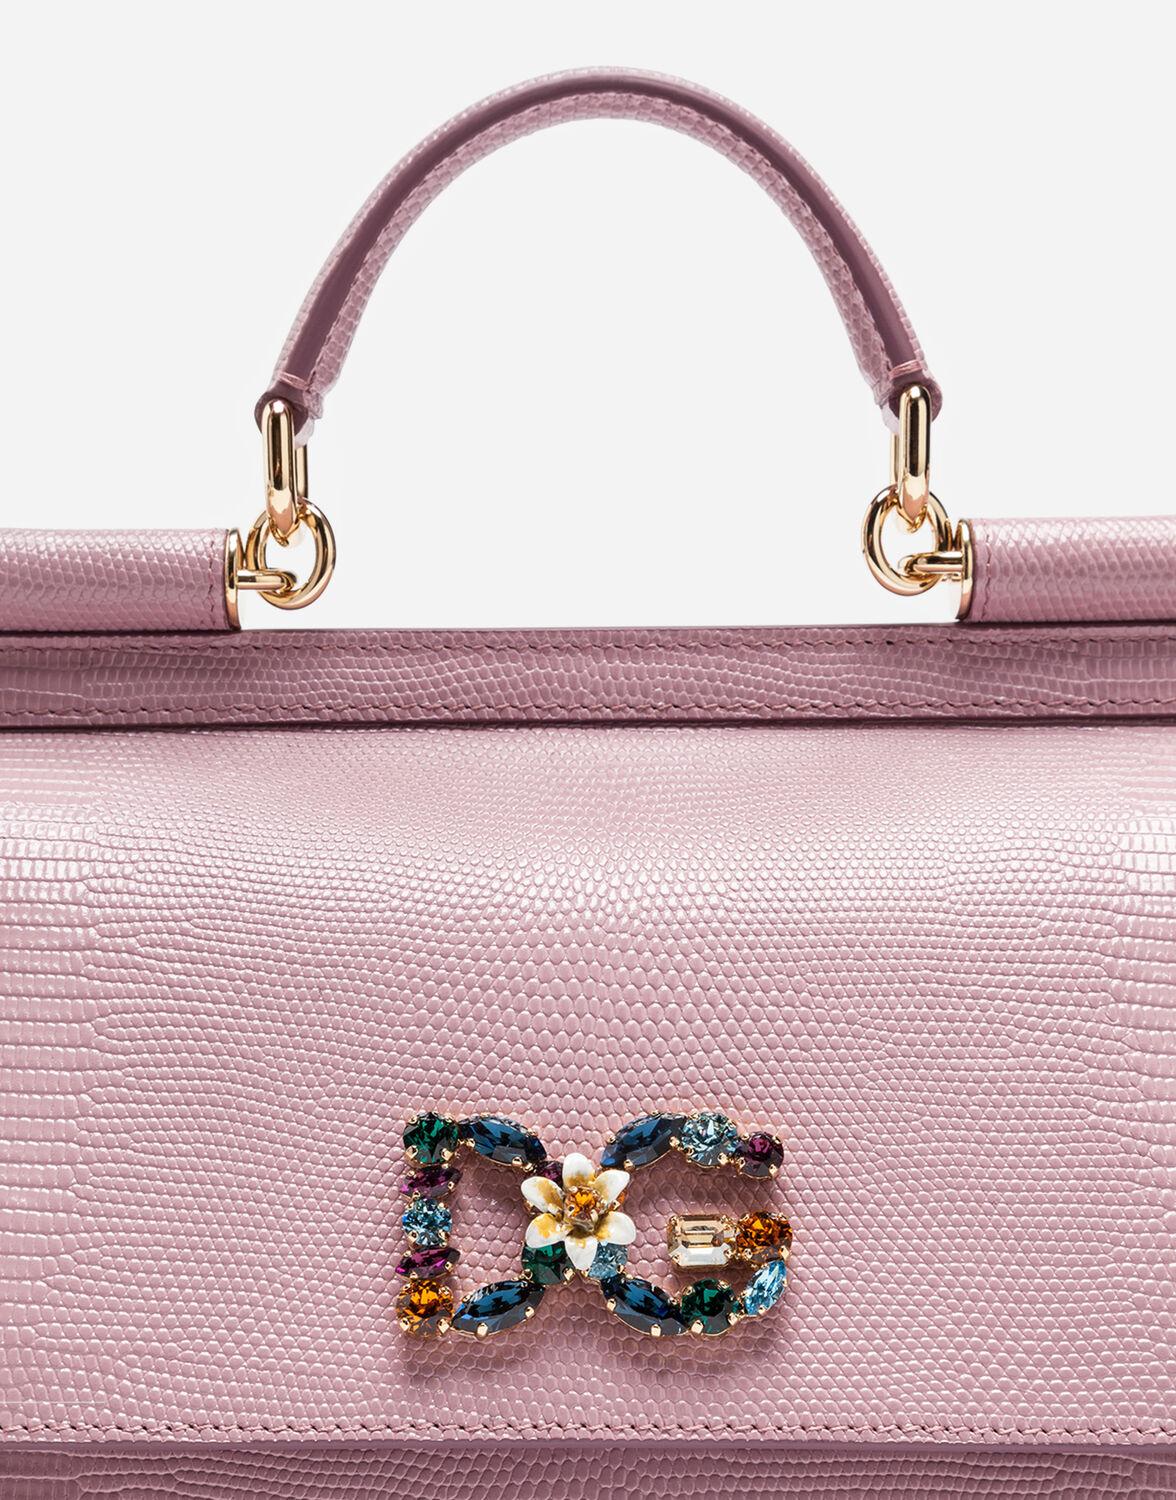 Dolce & Gabbana Iguana-Print Mini Bag